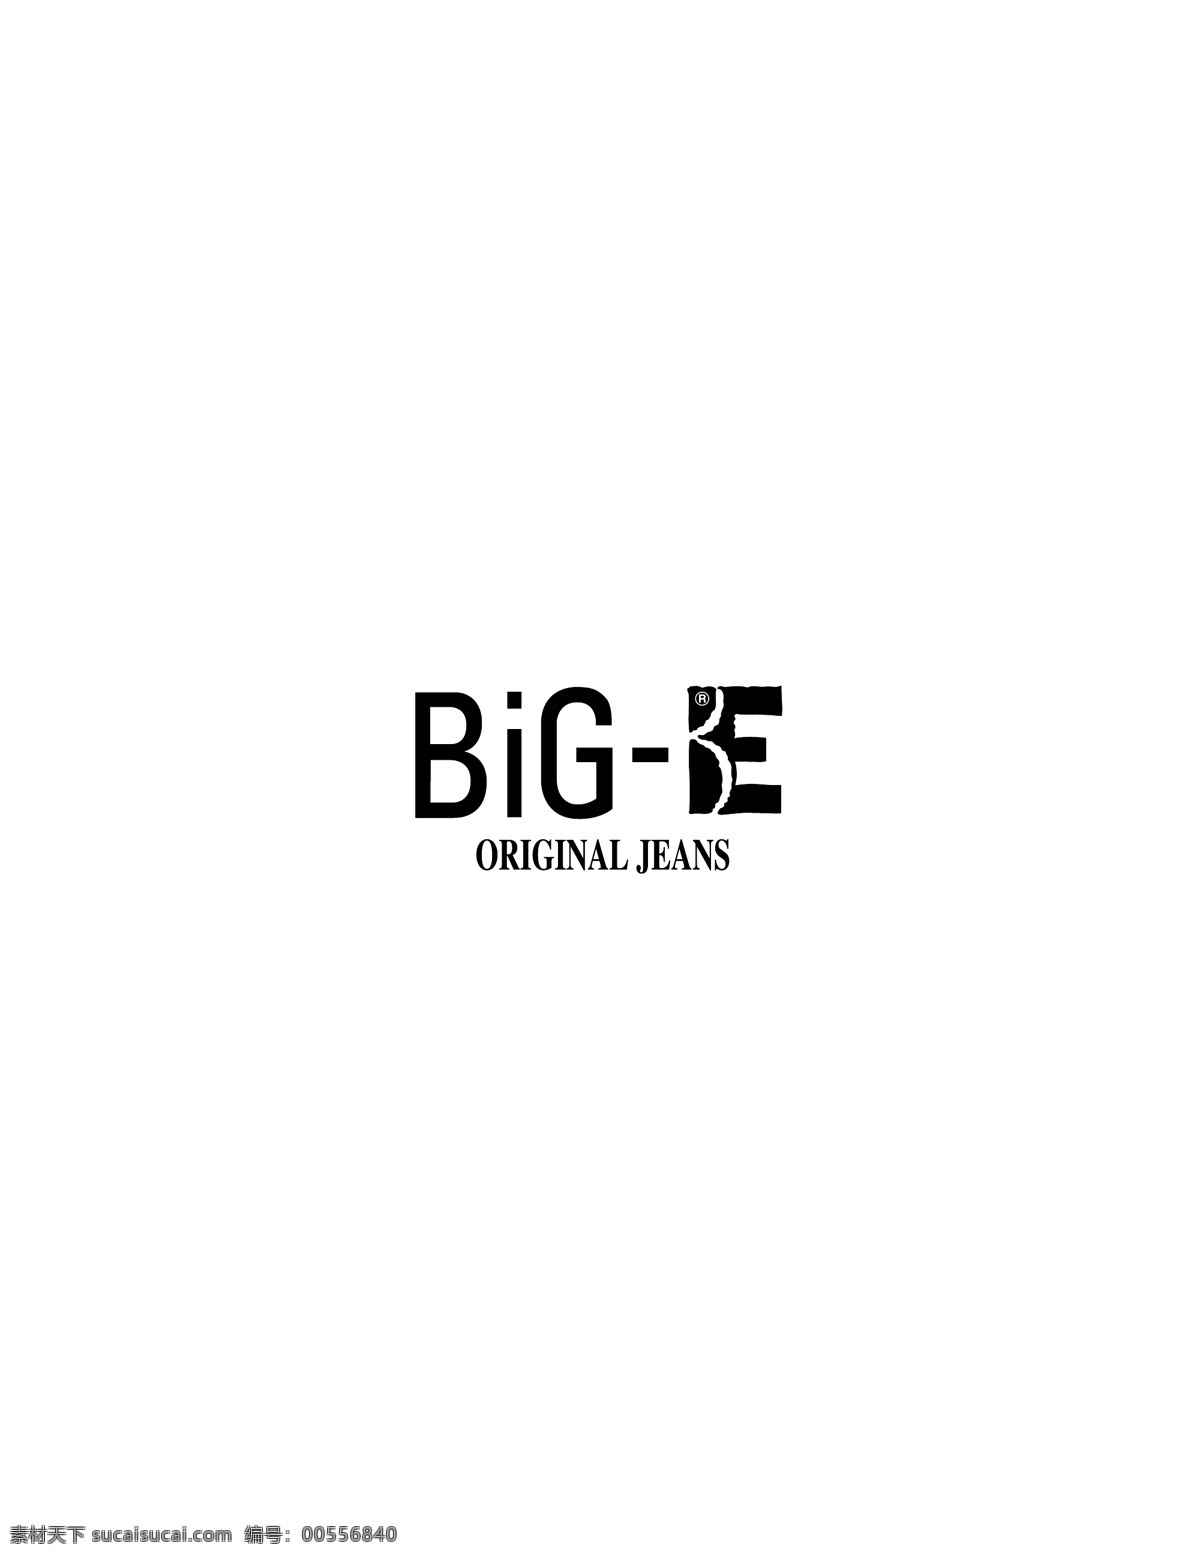 bige logo大全 logo 设计欣赏 商业矢量 矢量下载 服装 品牌 标志设计 欣赏 网页矢量 矢量图 其他矢量图